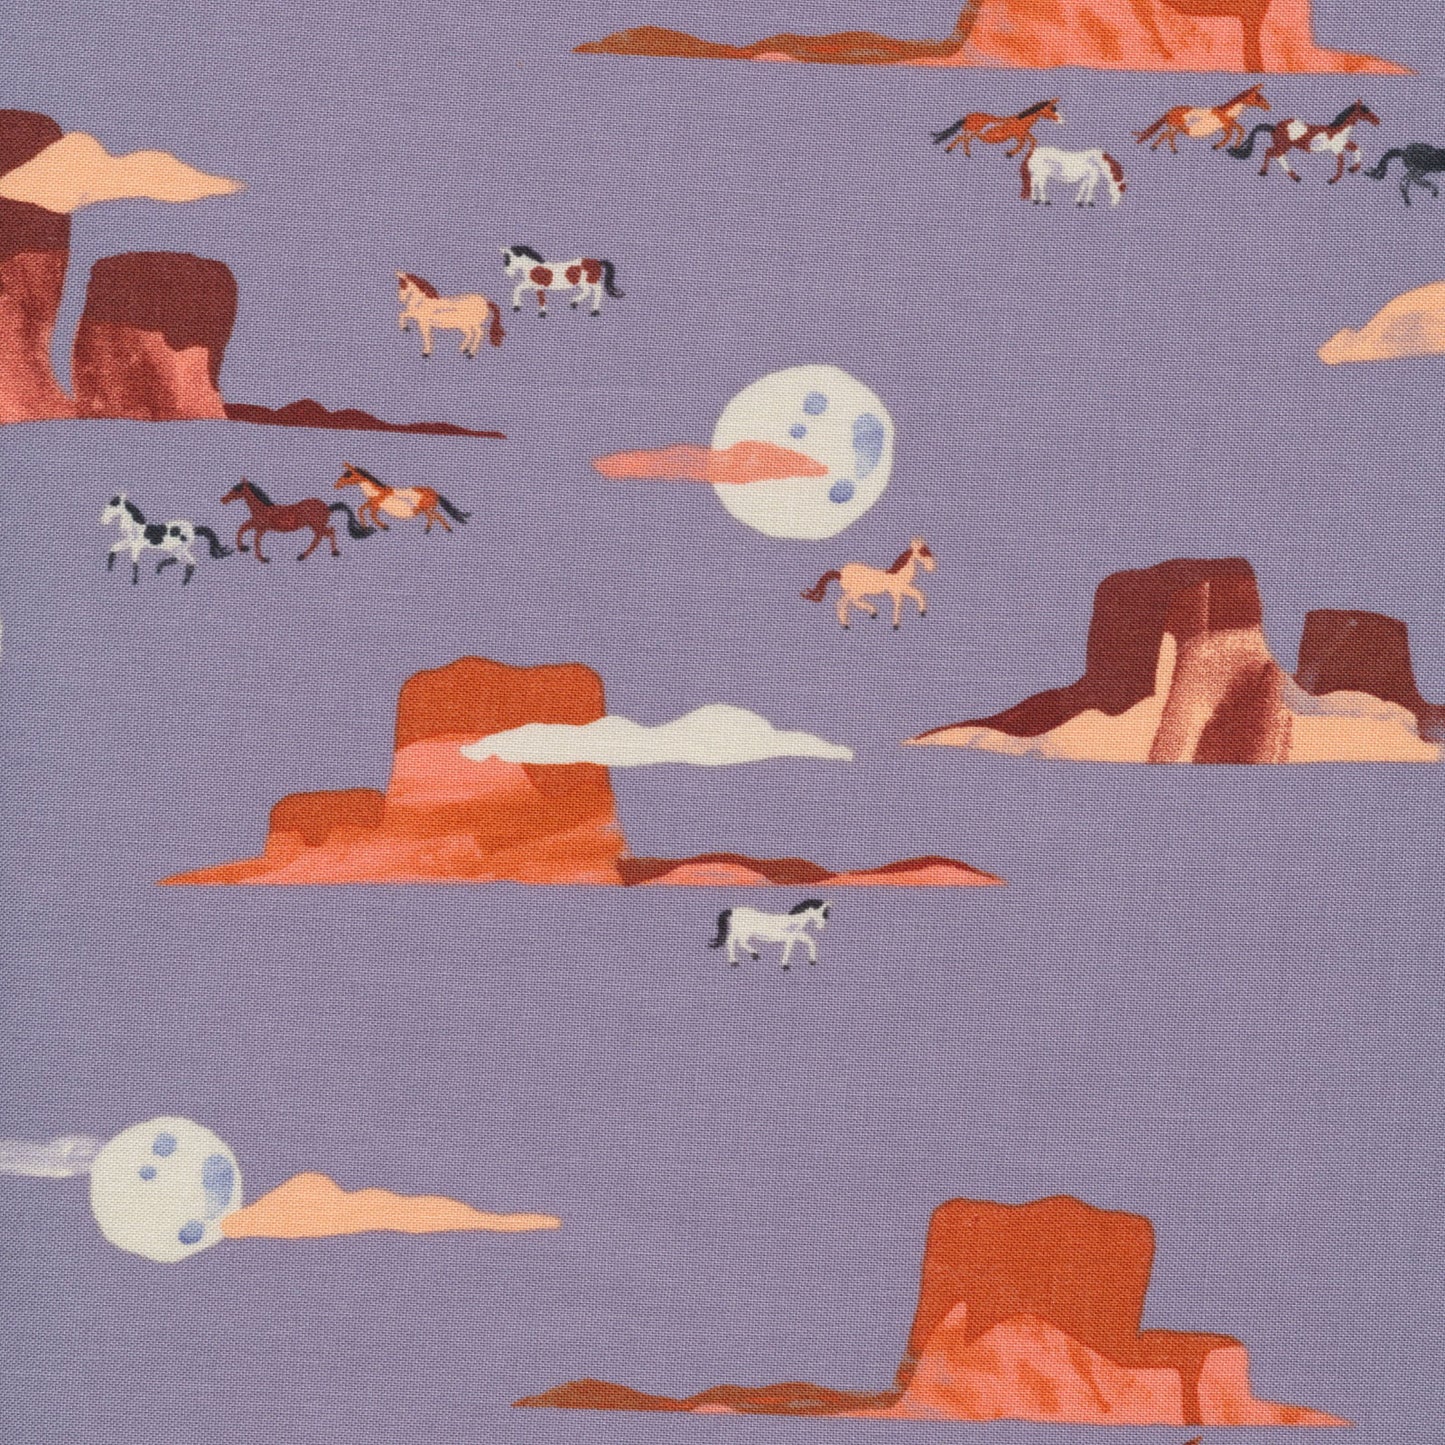 Arid Wilderness || Moonlit Mustangs || Organic Cotton Quilting Fabric || Half Yard